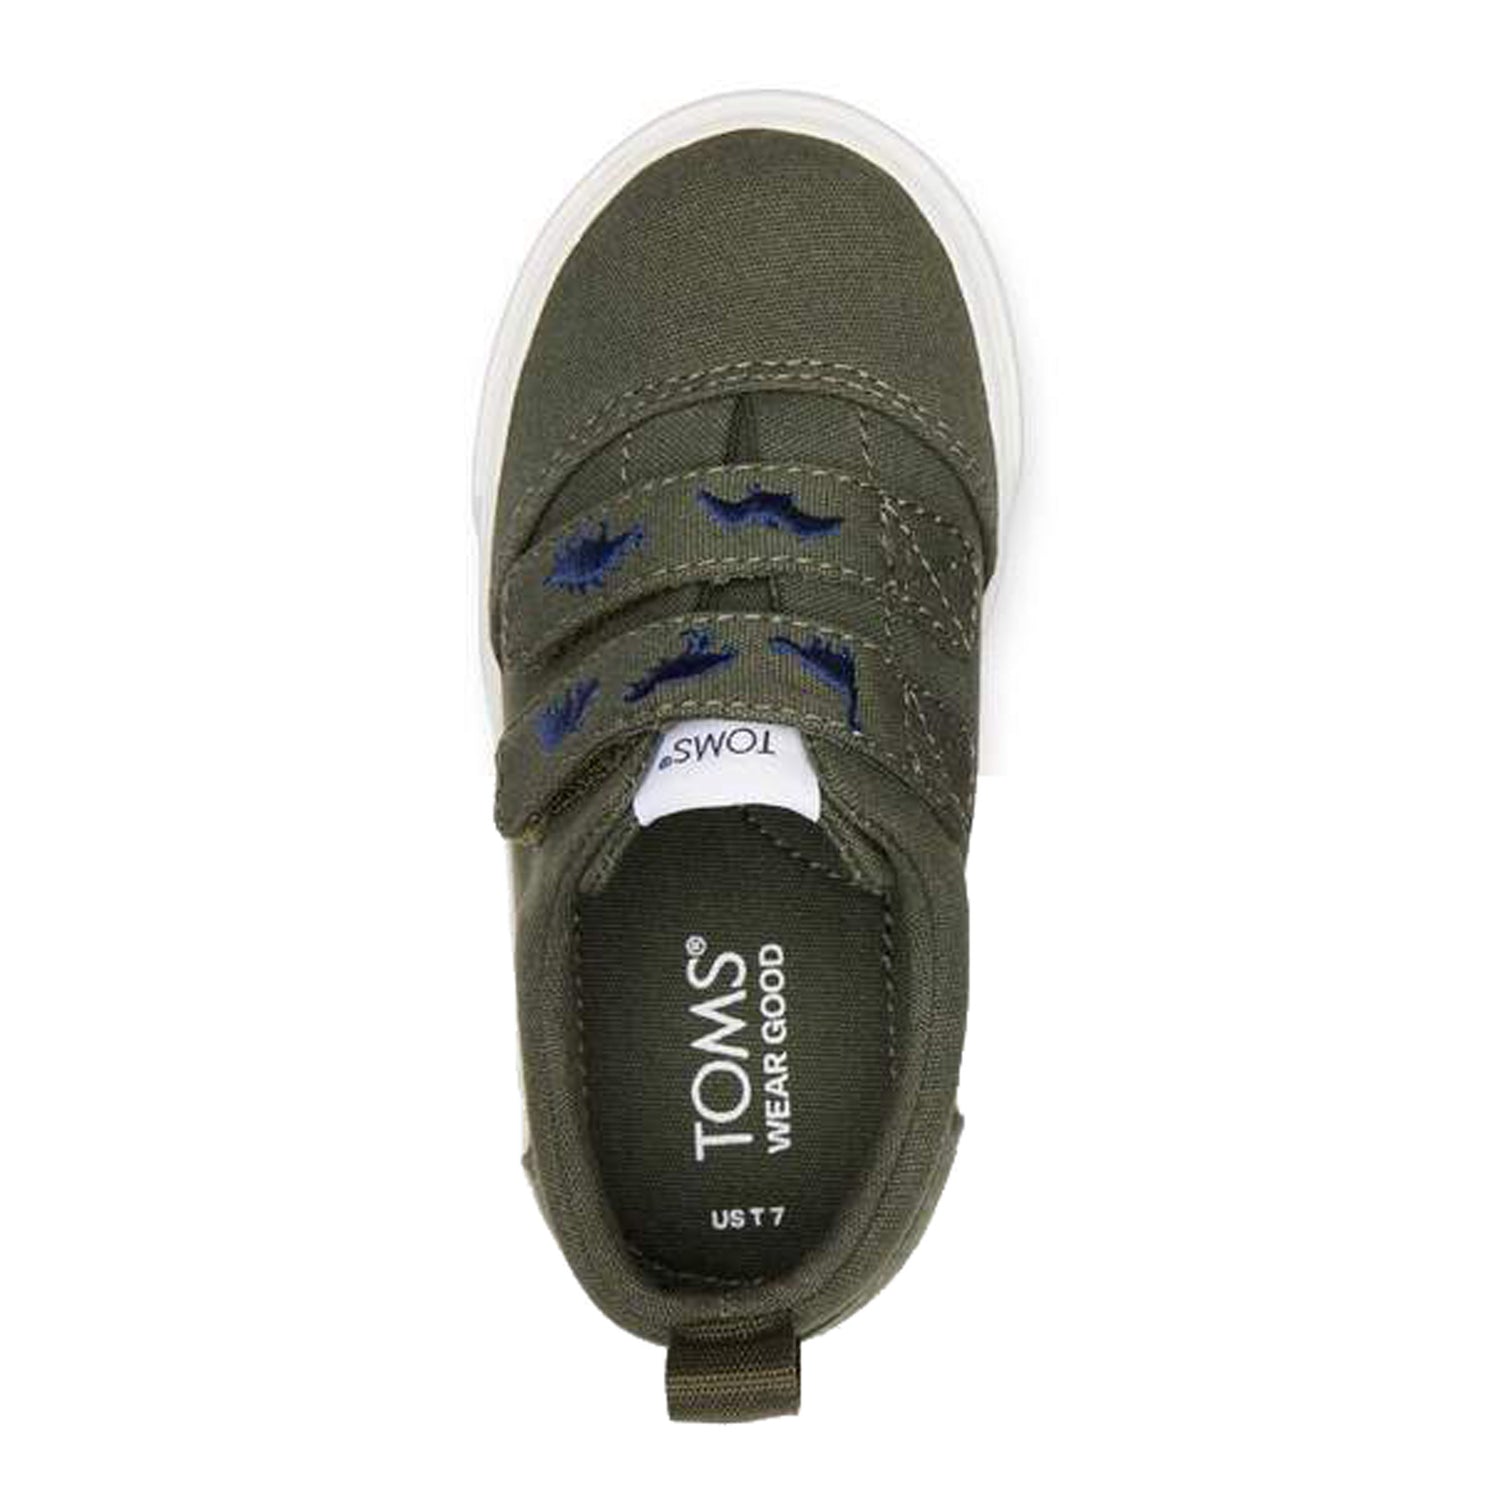 Peltz Shoes  Boy’s Toms Fenix Sneaker - Toddler Dark Sage 10020535